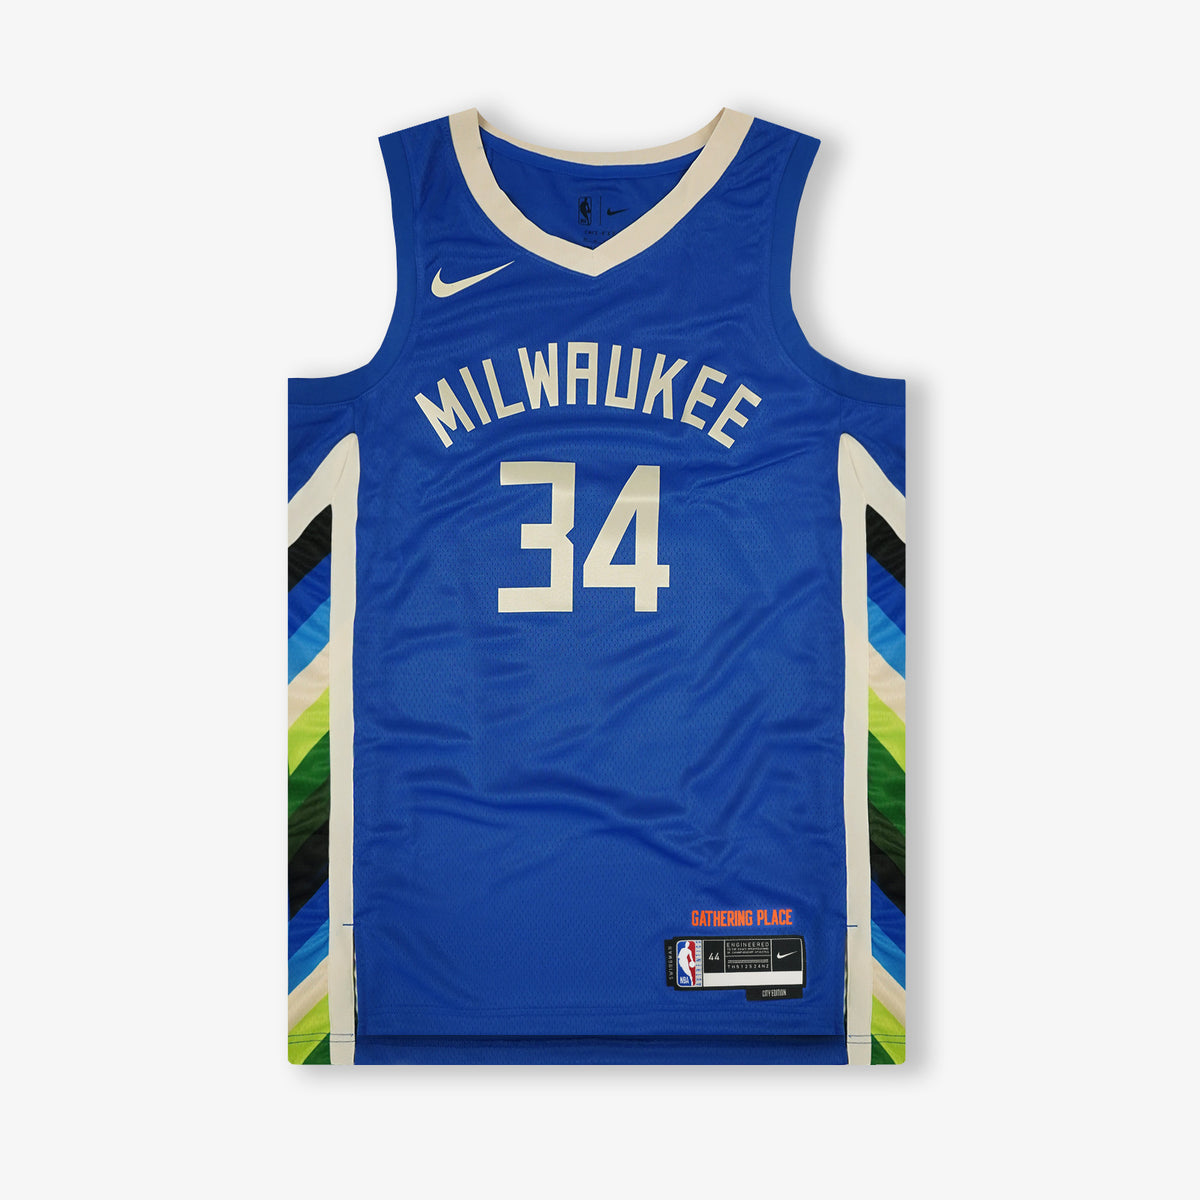 Milwaukee Bucks 22/23 City Edition Uniform: Bronzeville